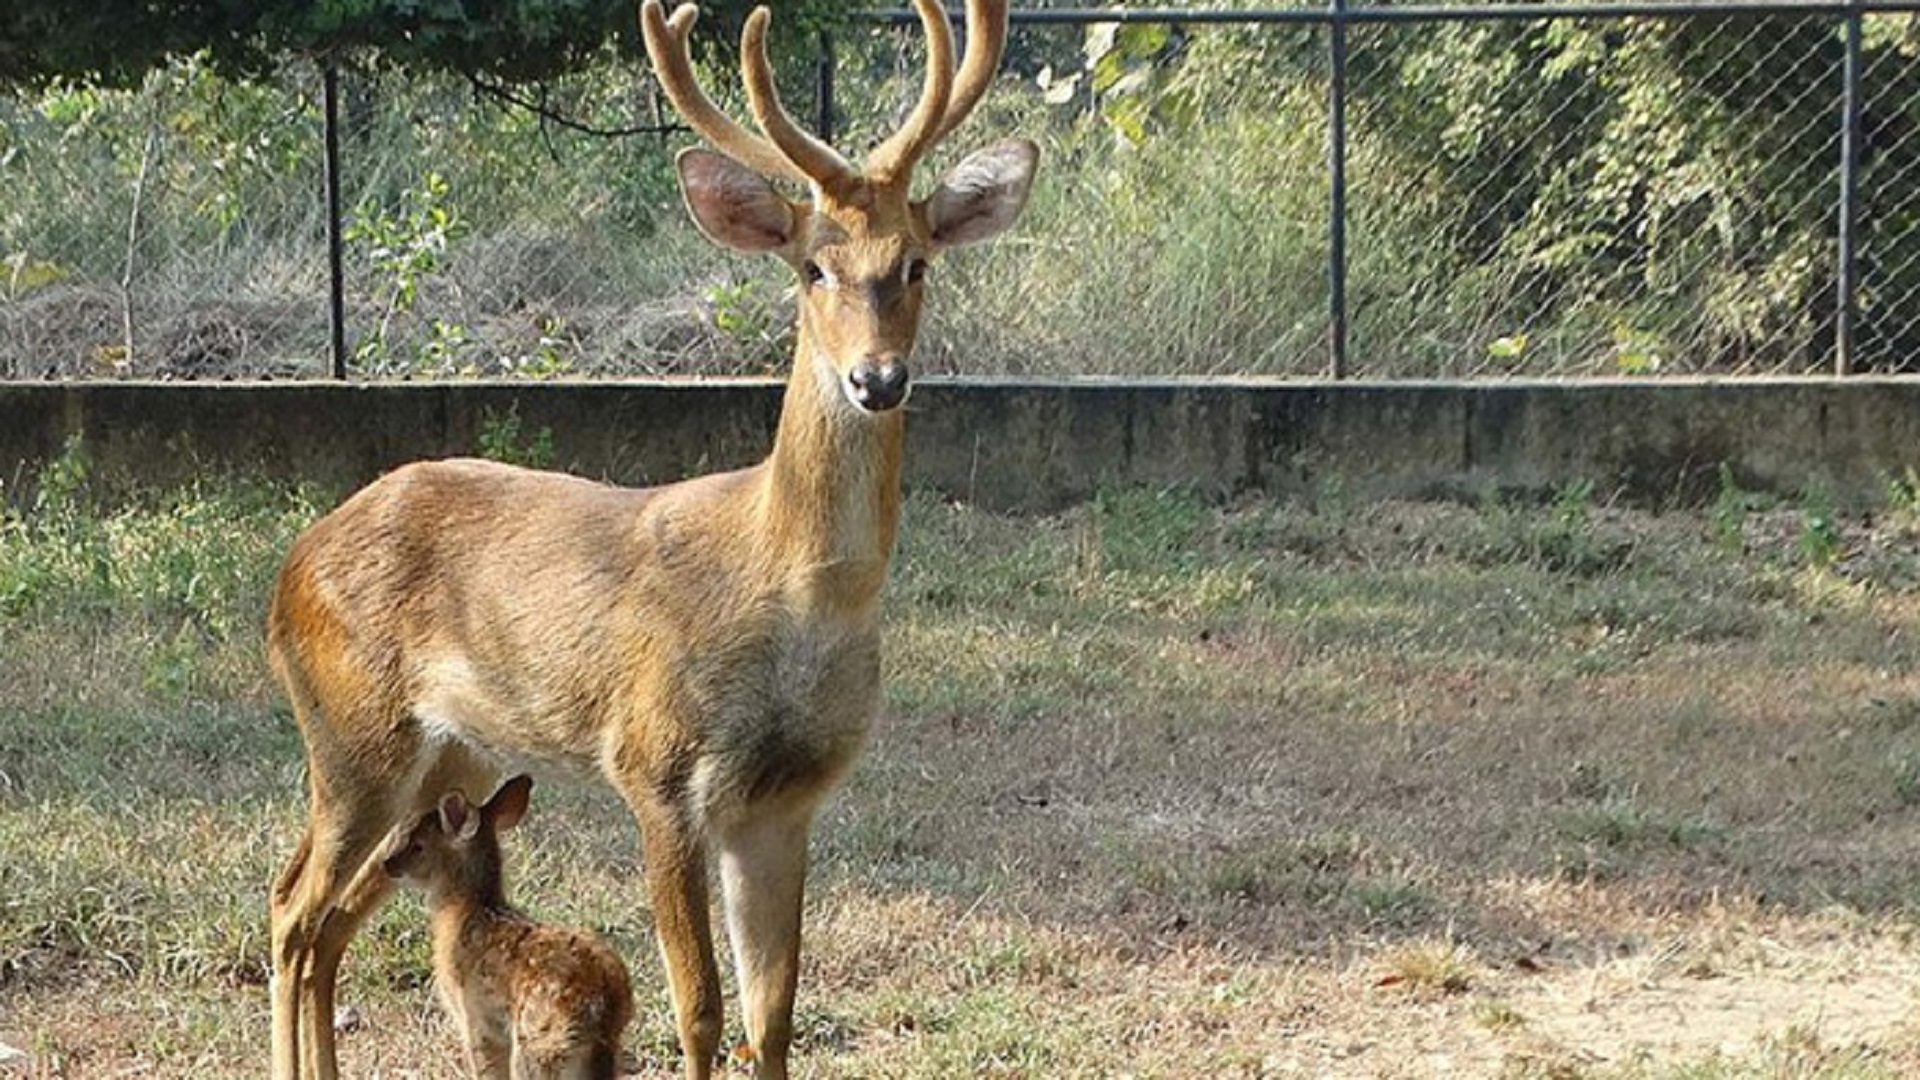 Dancing deer, Kangaroo and Zebra will enhance Lucknow Zoo's beauty - Goats  On Road